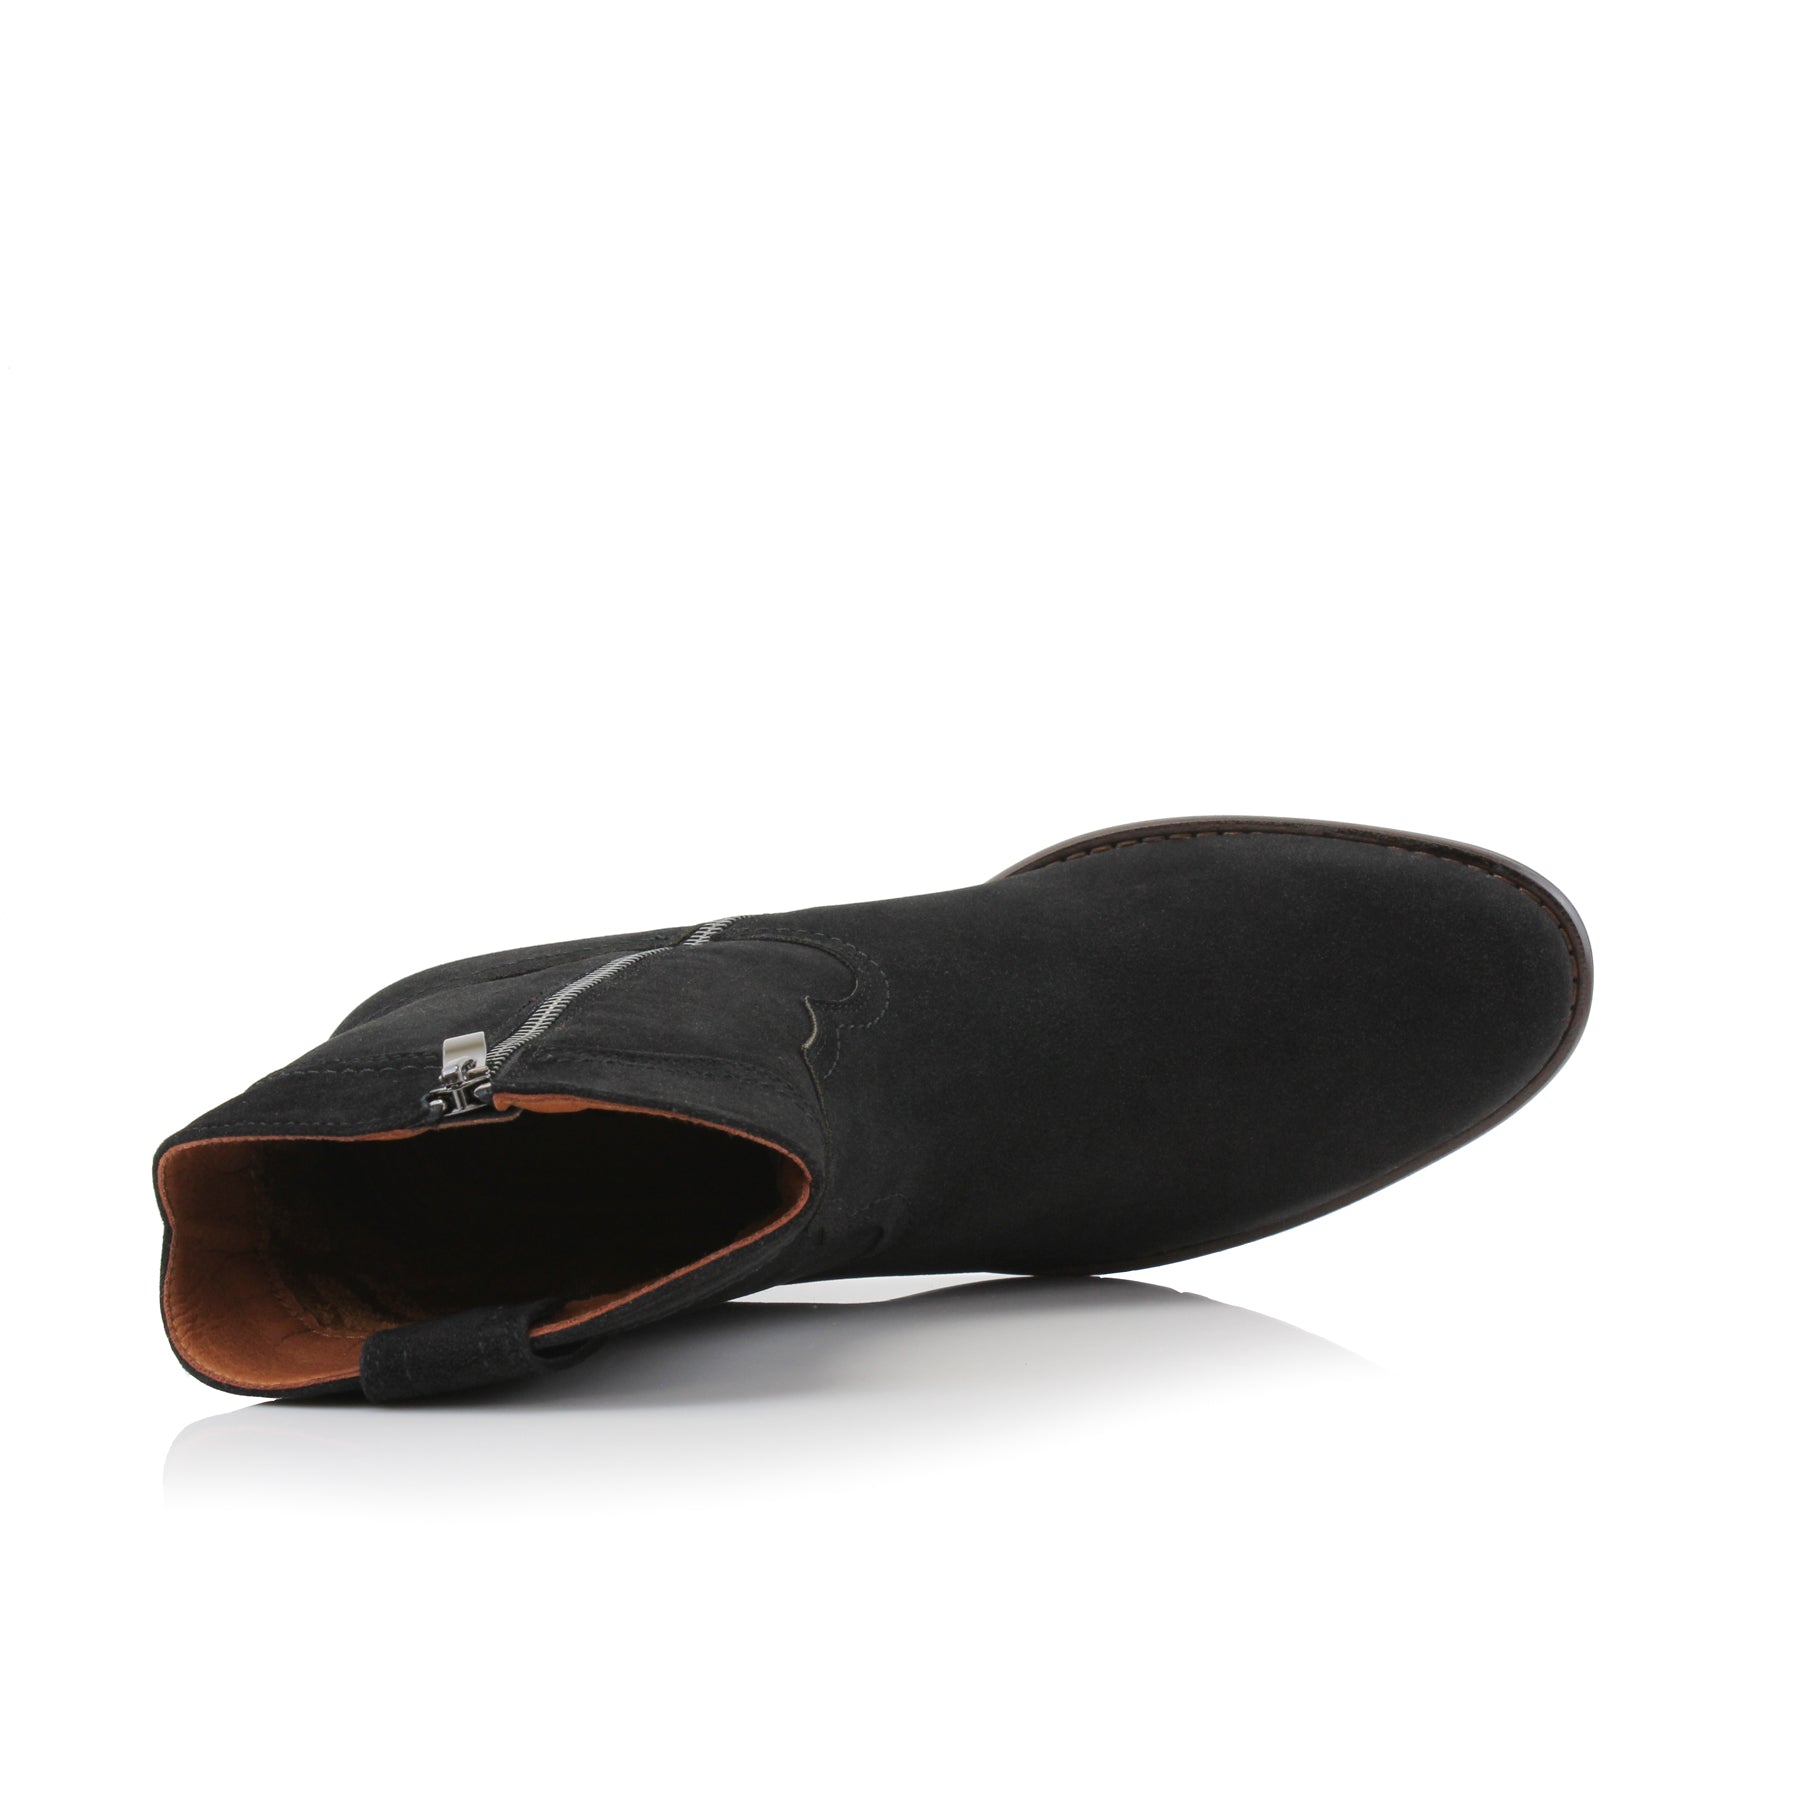 Men's Suede Western Boots | Austin by Ferro Aldo | Conal Footwear | Top-Down Angle View